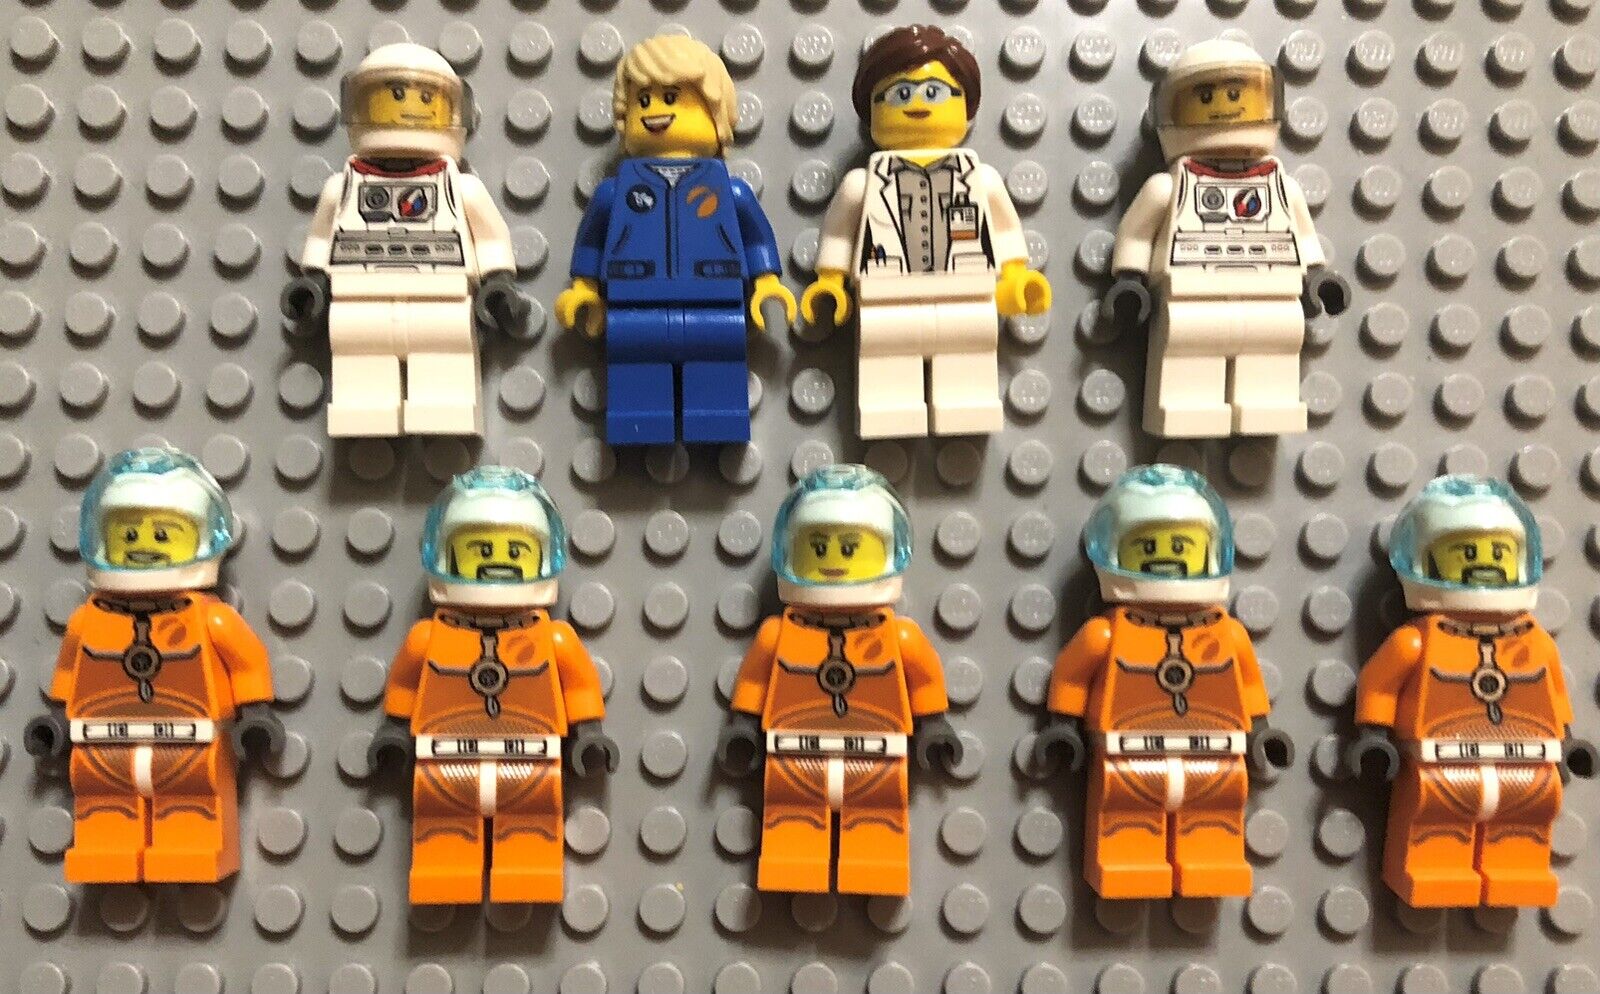 9 LEGO Space Astronaut Scientists Explorers City Minifigures